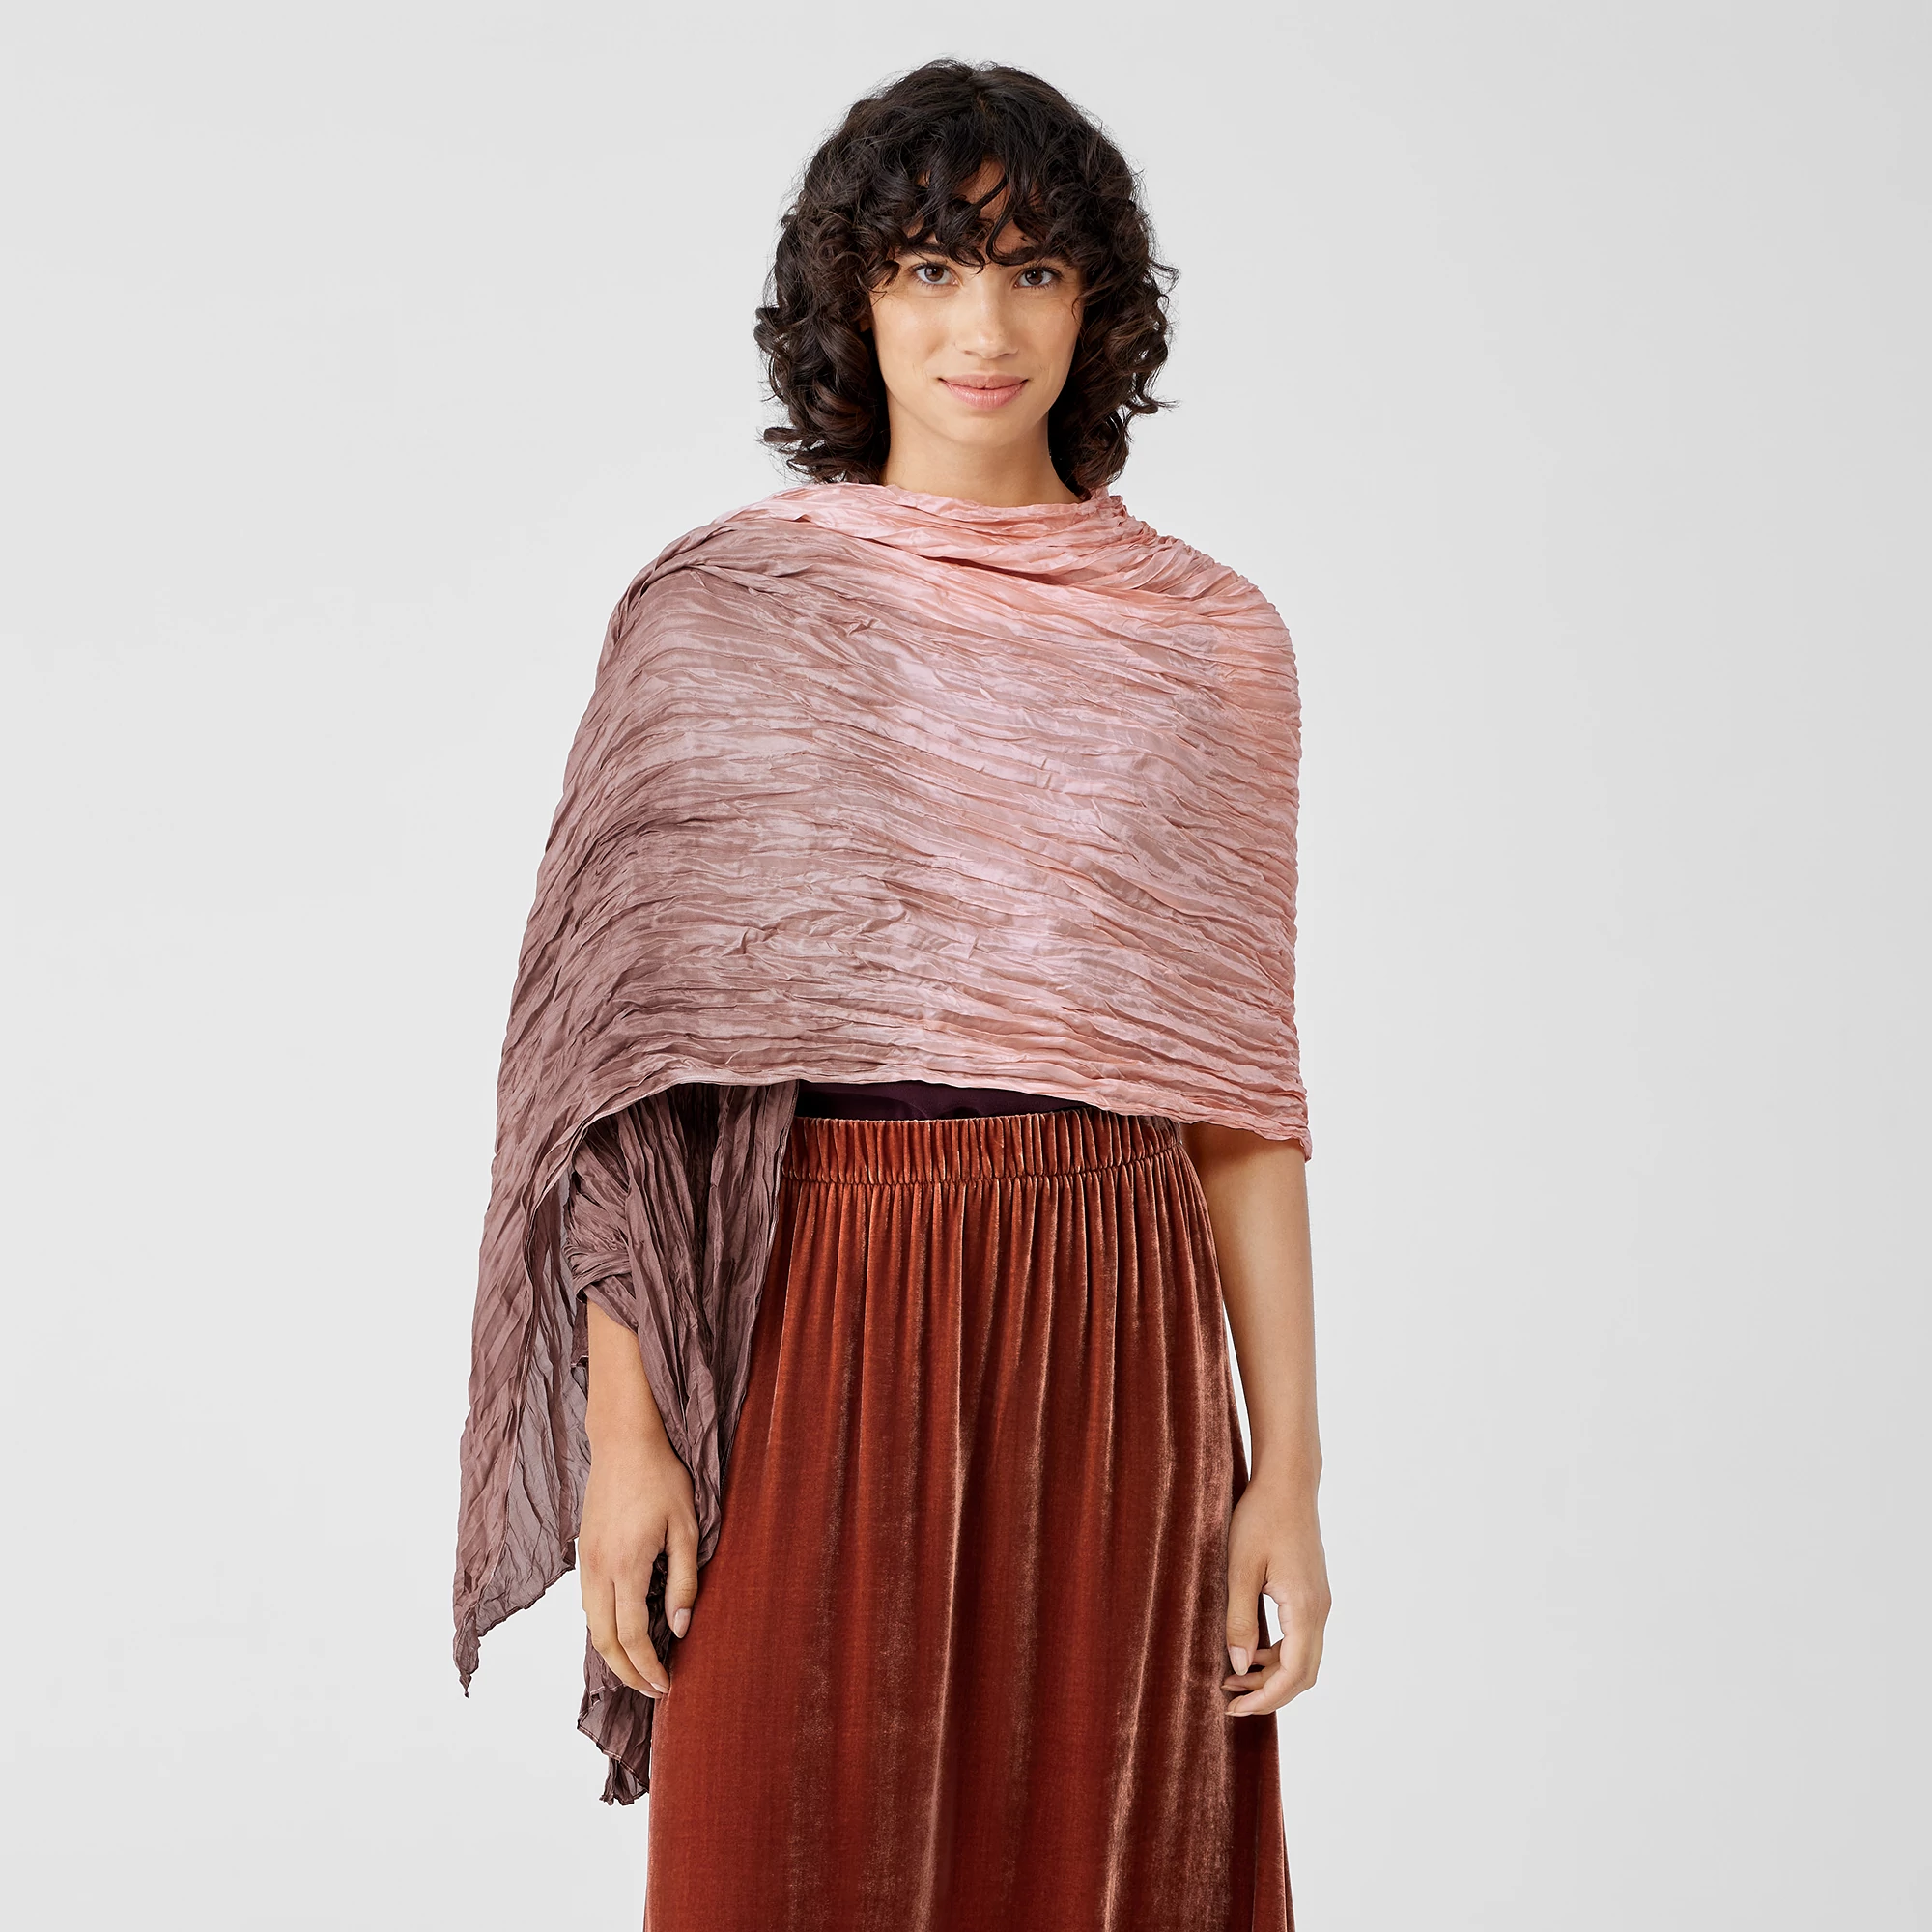 Eileen Fisher silk shibori dot scarf - brown and pearl gray